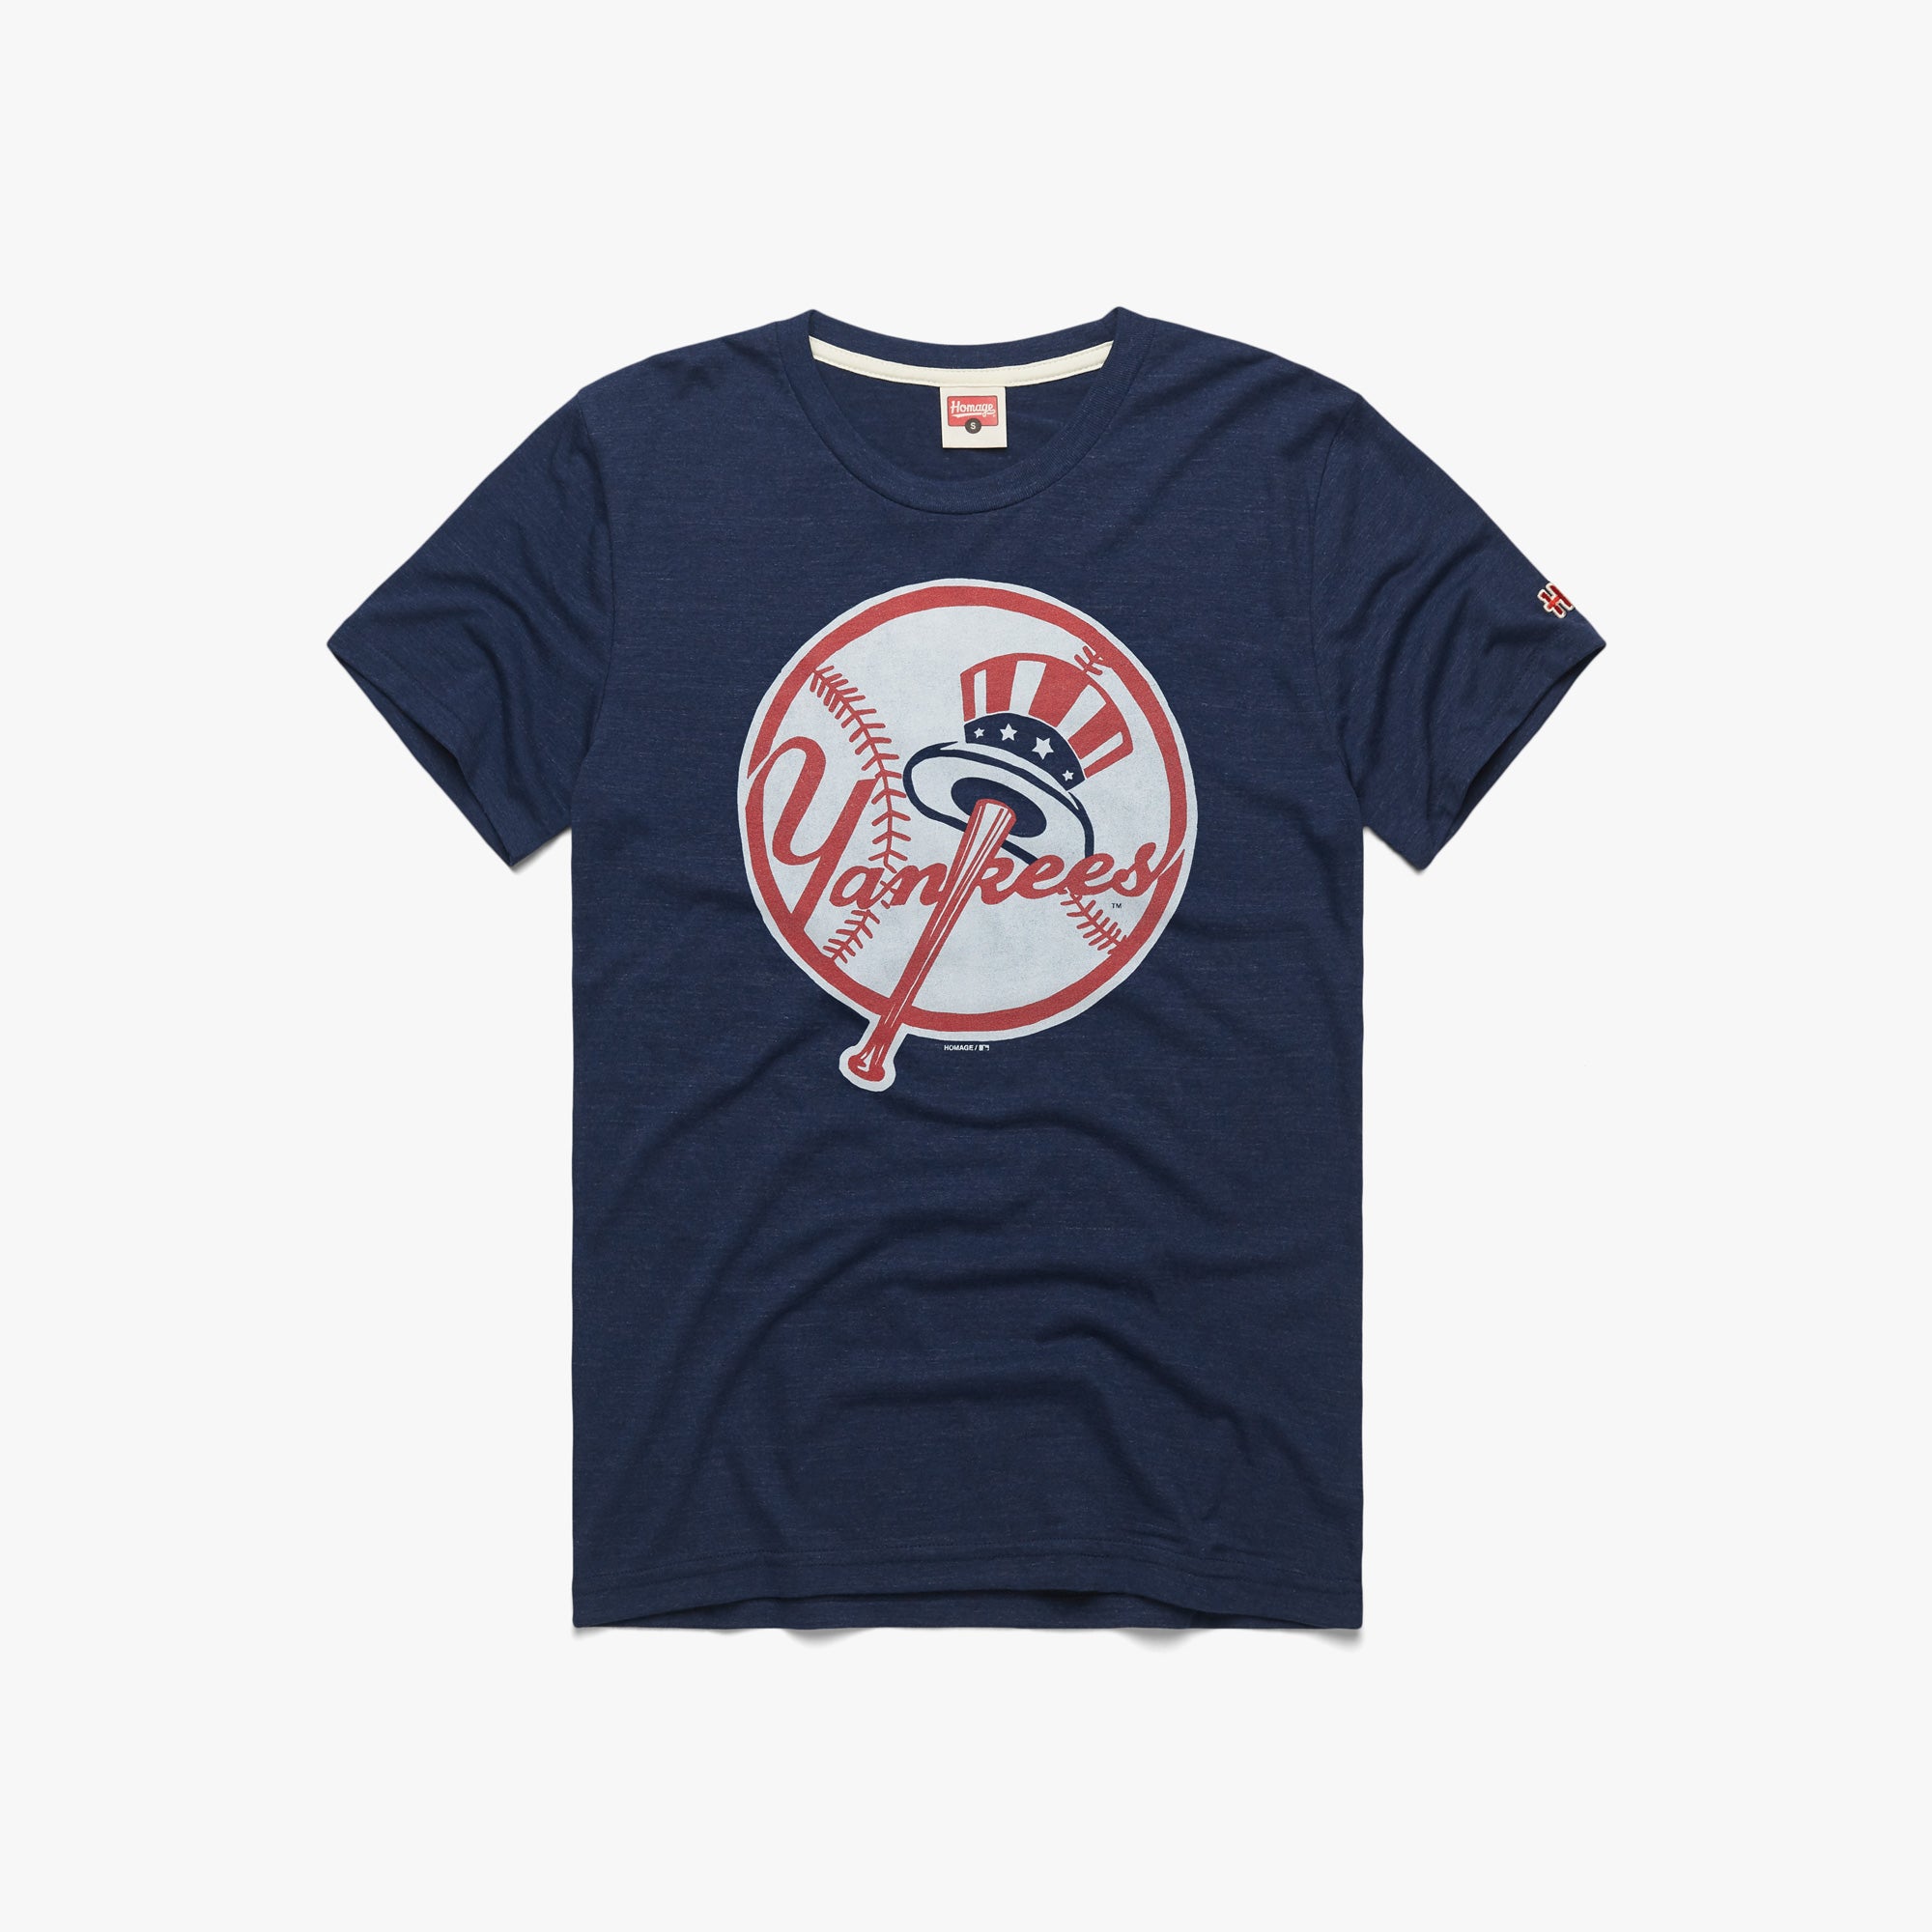 Vintage New York Yankees T Shirt Tee Made USA Size Medium M 